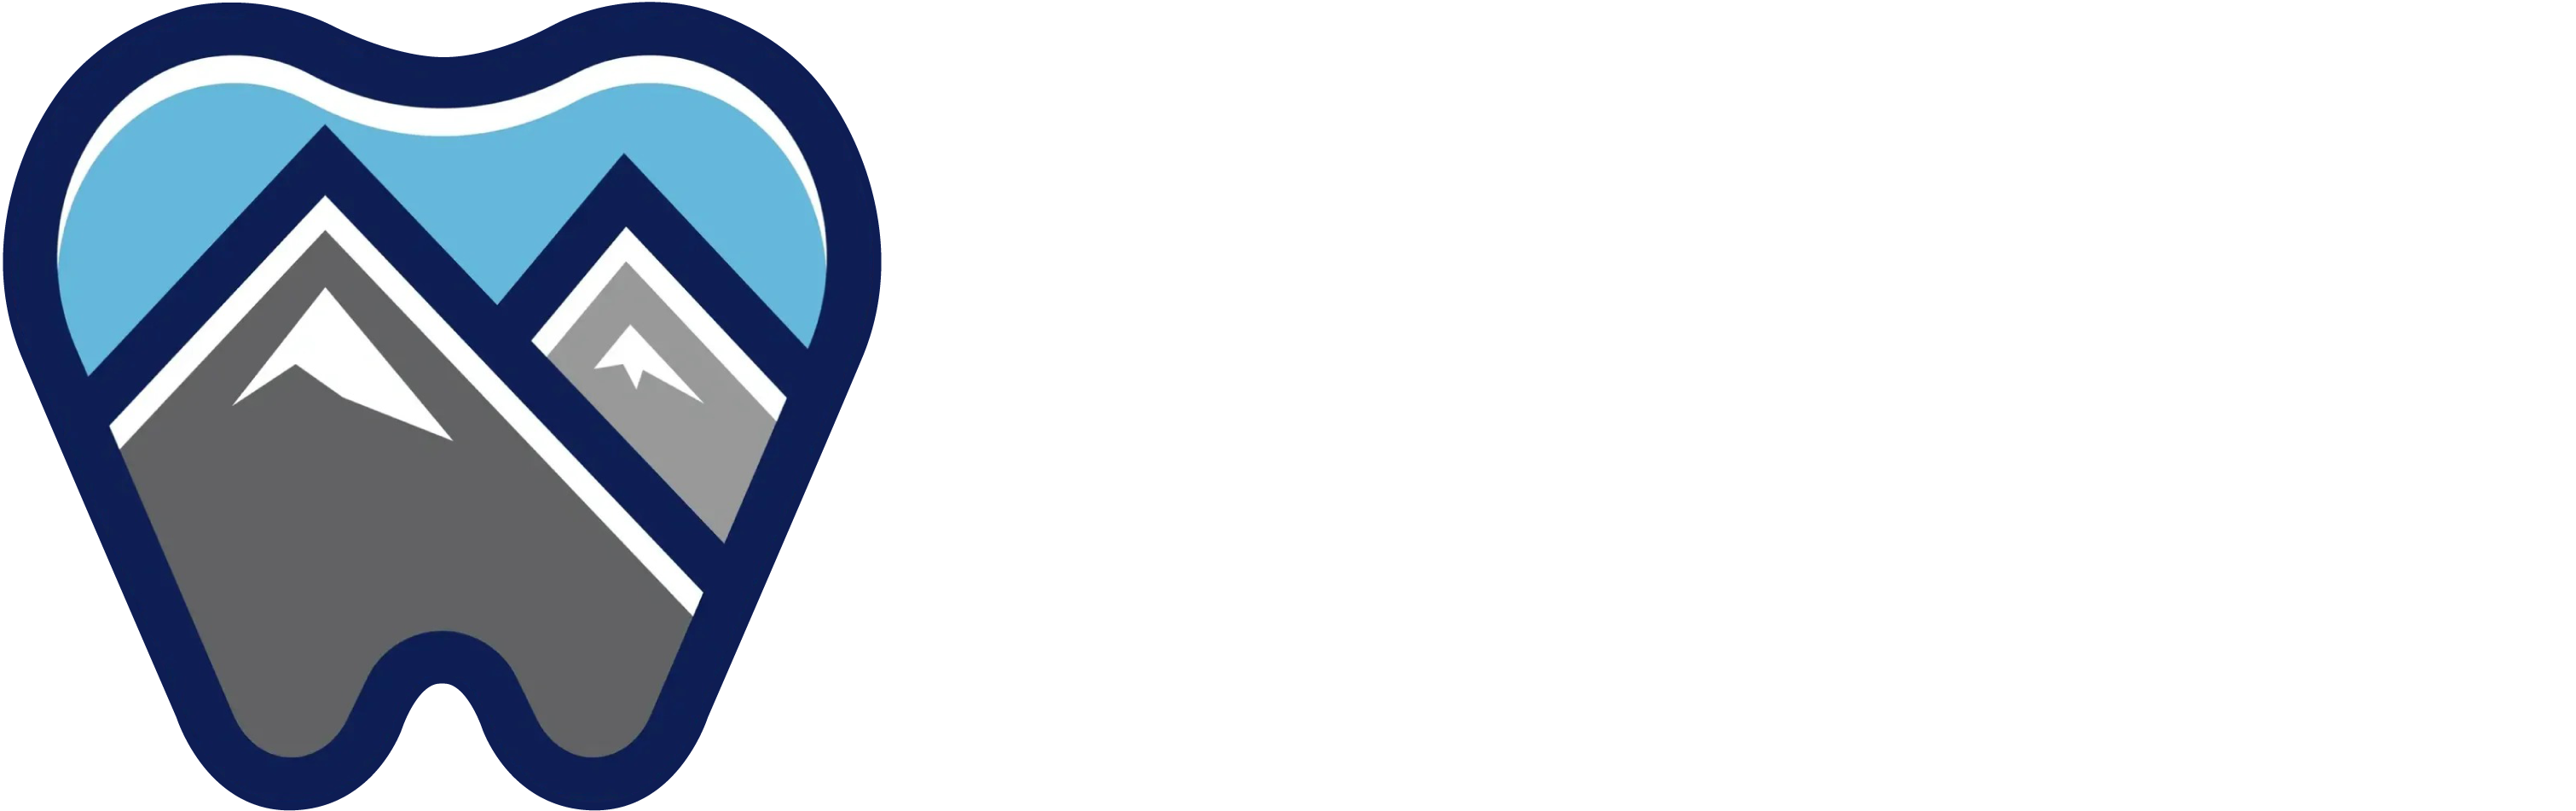 Our Team - SugarCreek Dental